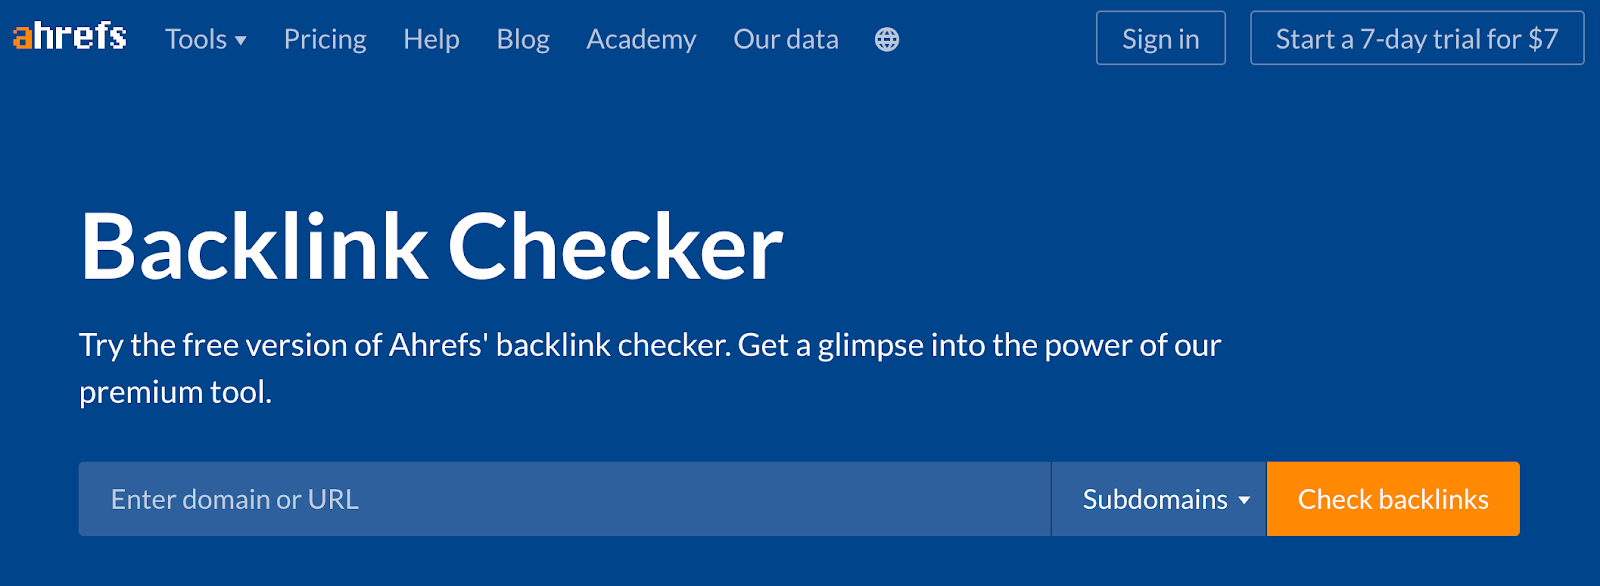 Ahrefs Backlink Checker page